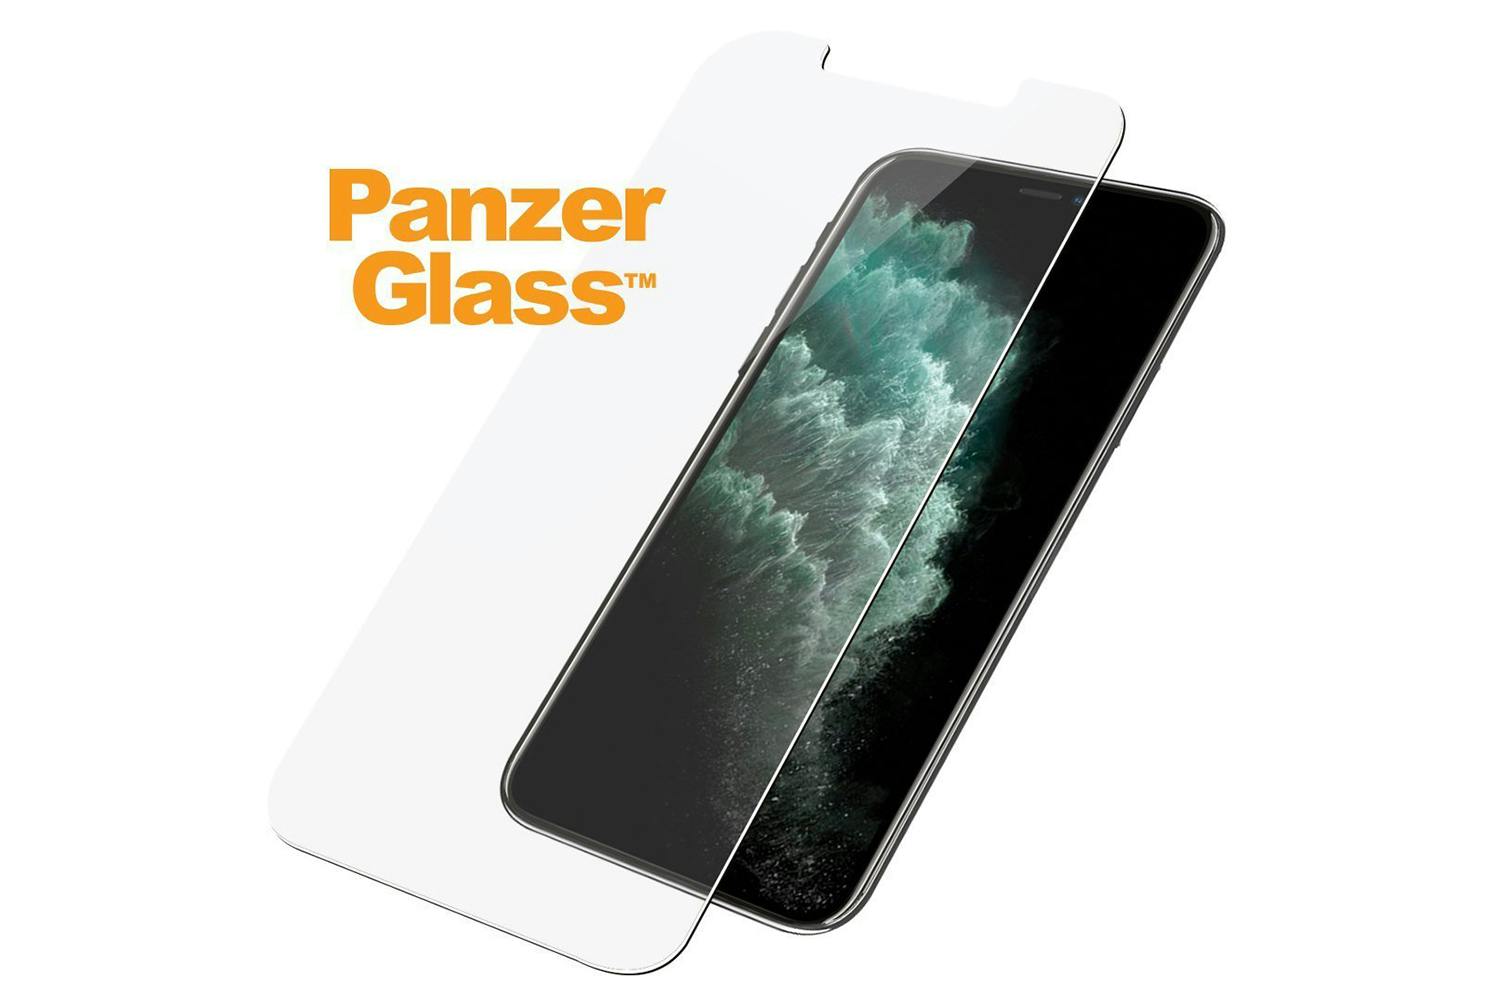 PanzerGlass iPhone XS Max/11 Pro Max Screen Protector